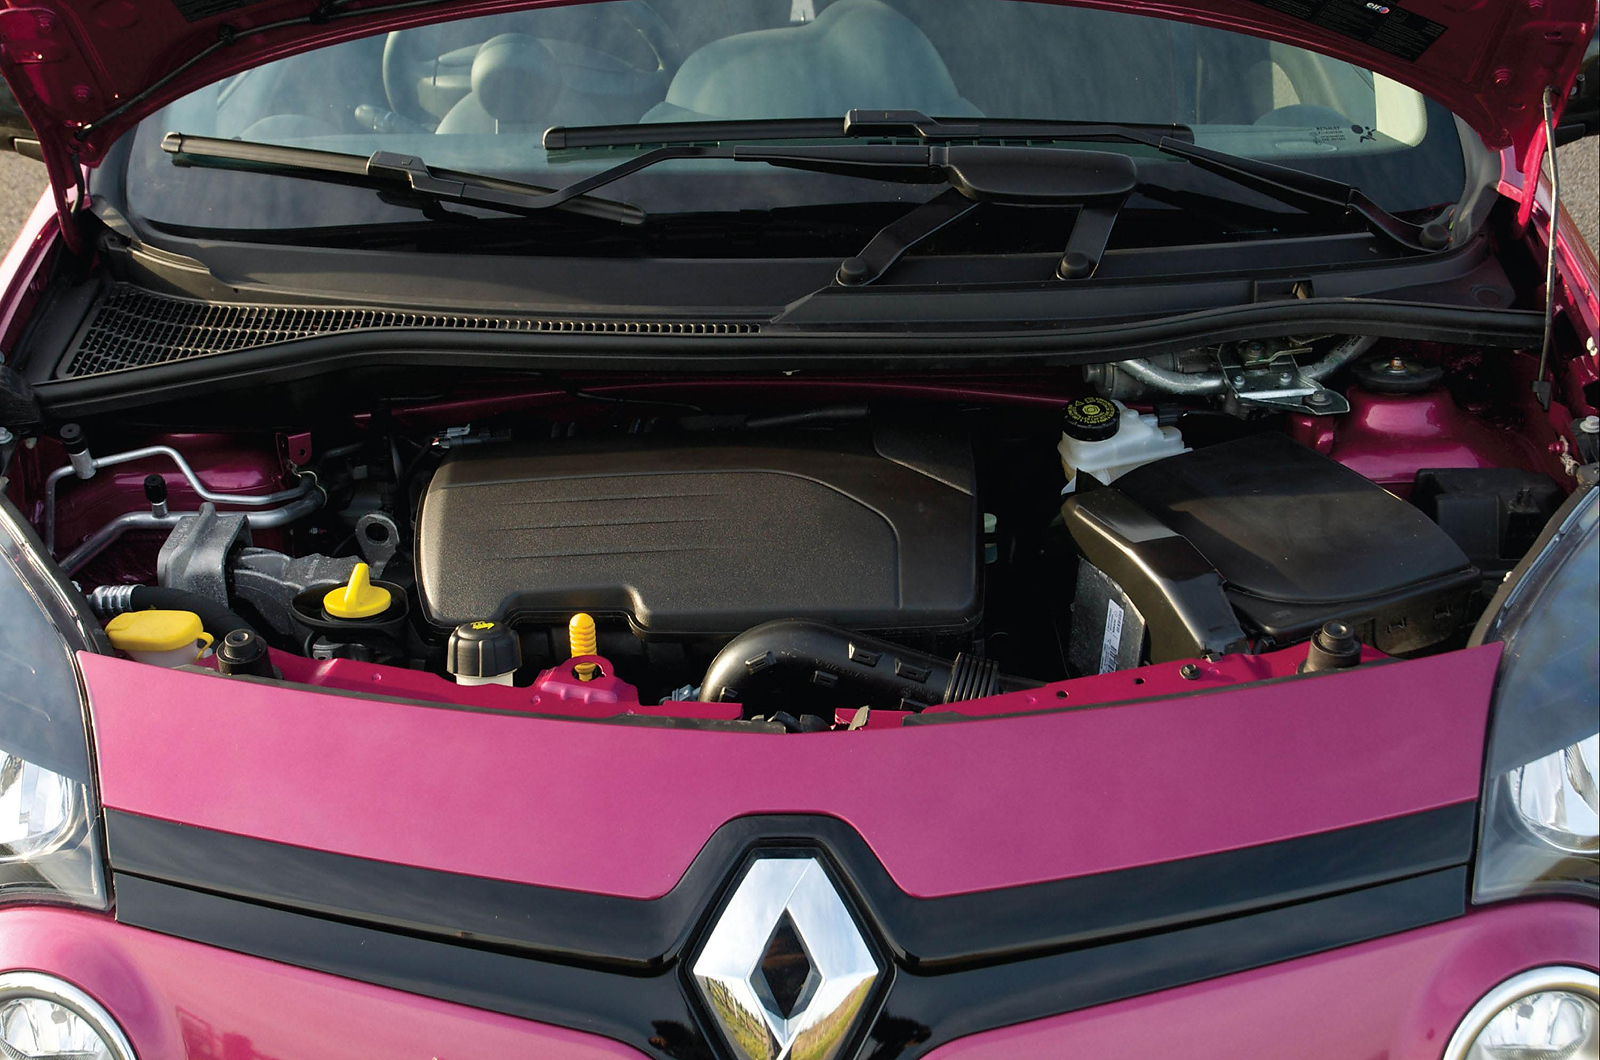 1.2-litre Renault Twingo engine